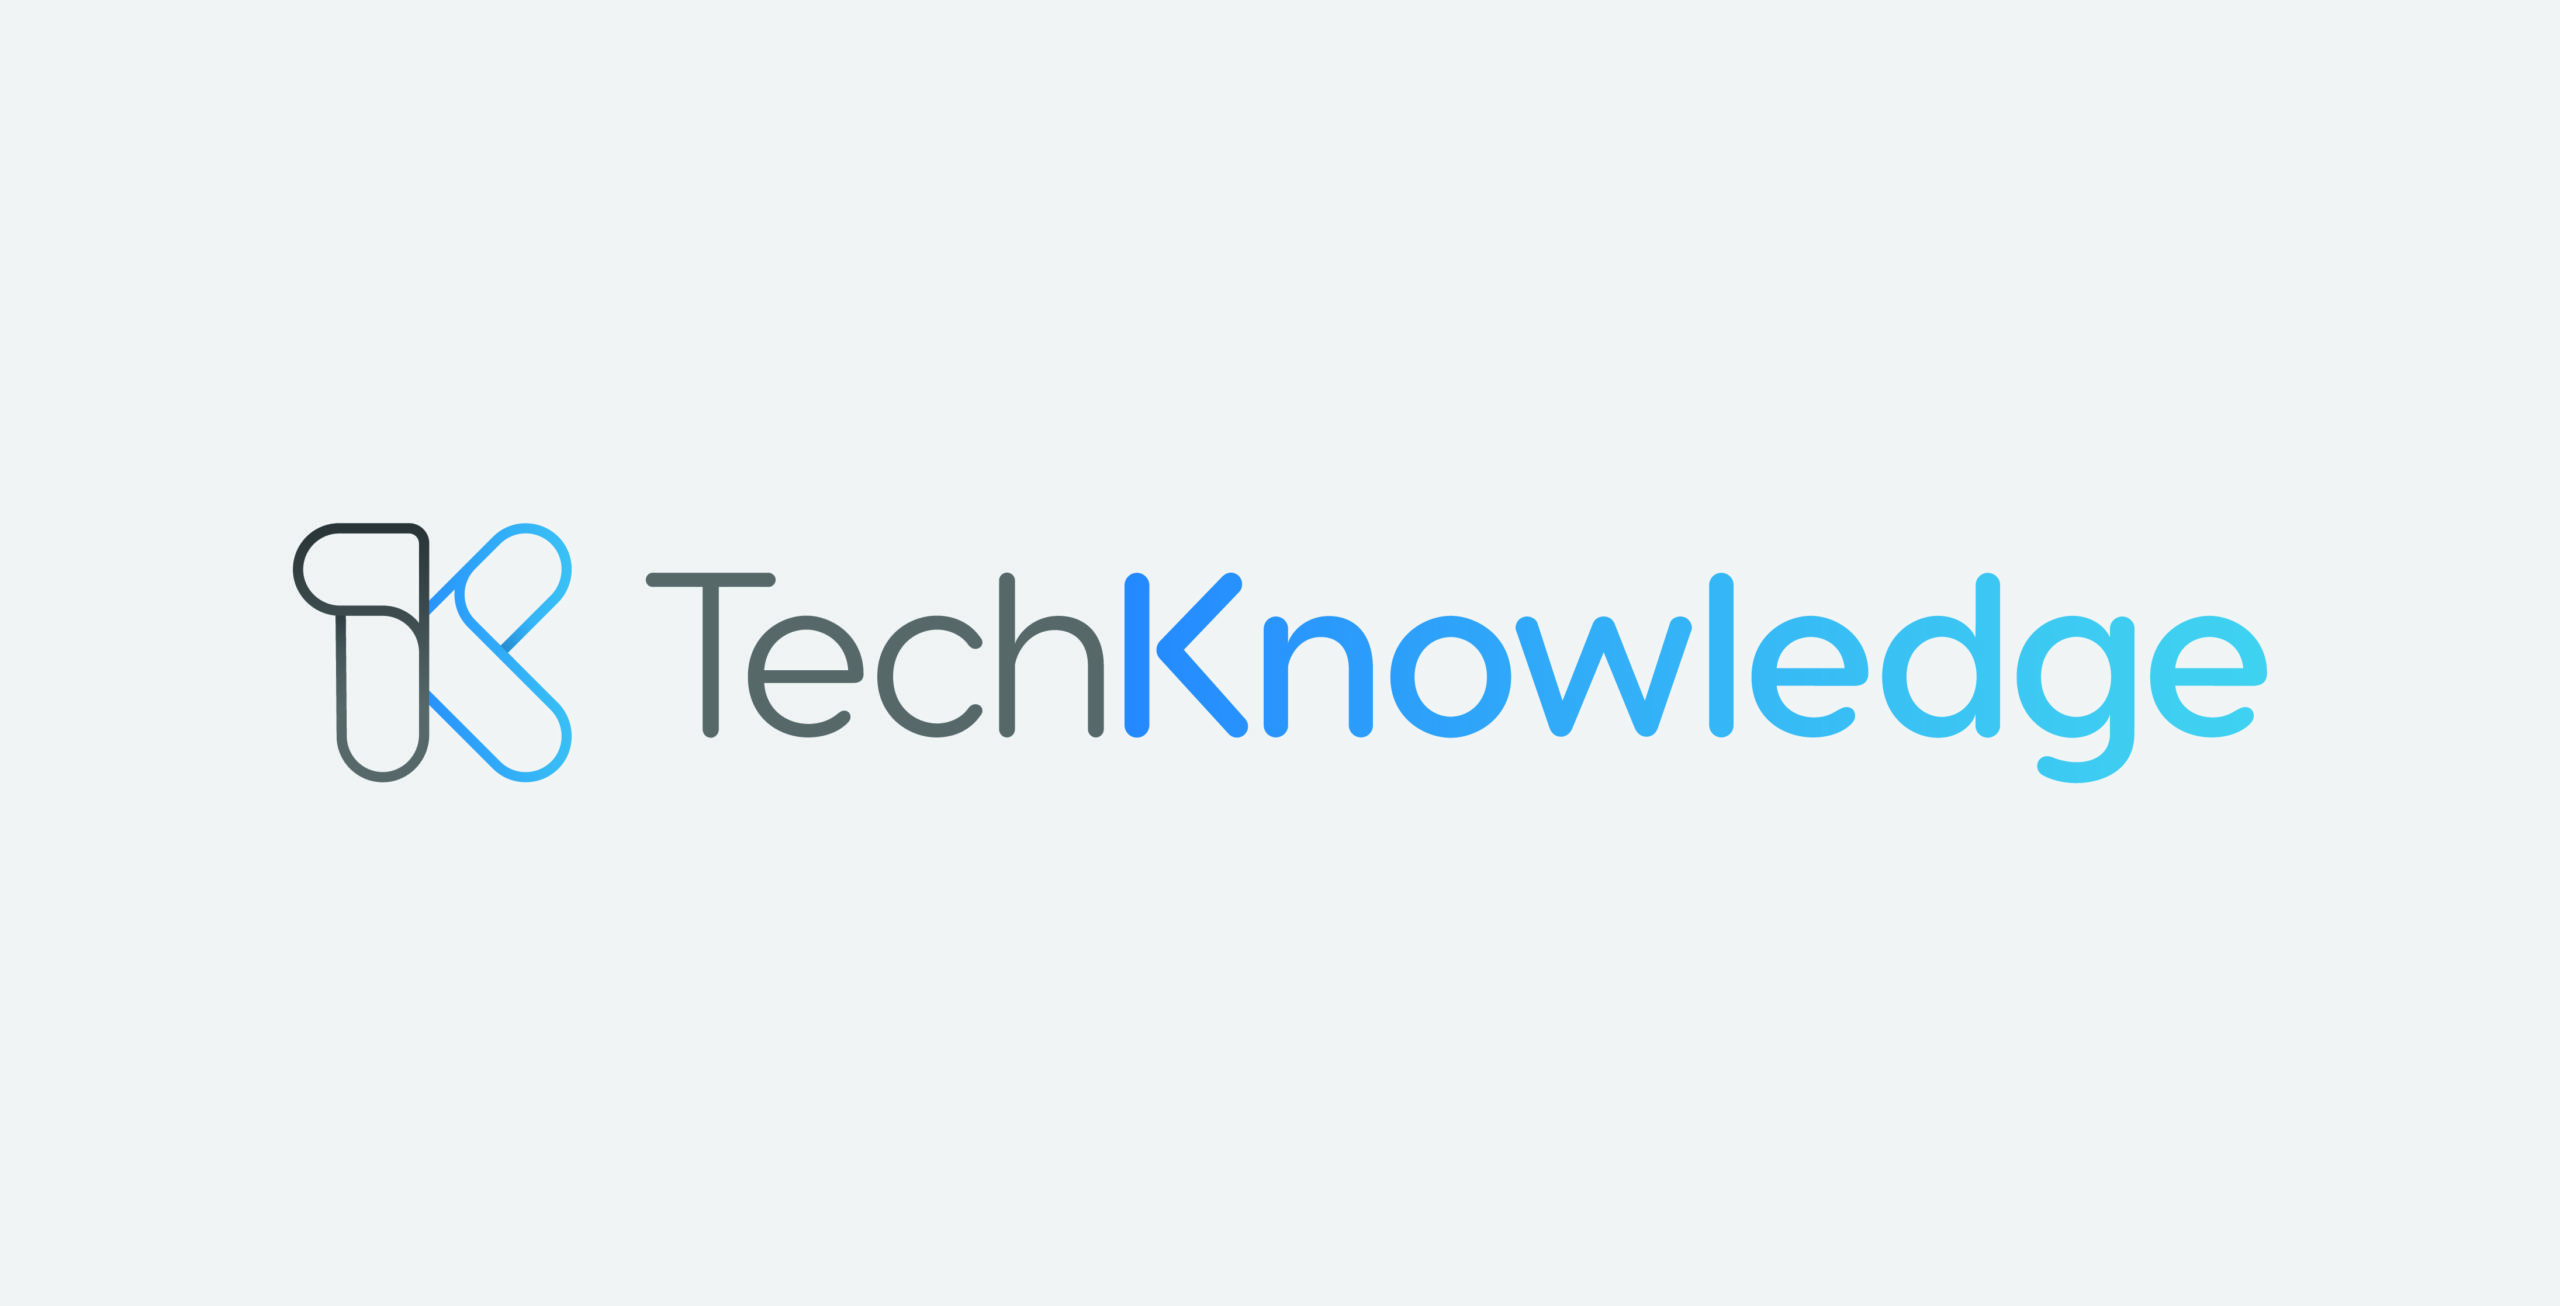 Techknowledge Logo design styles